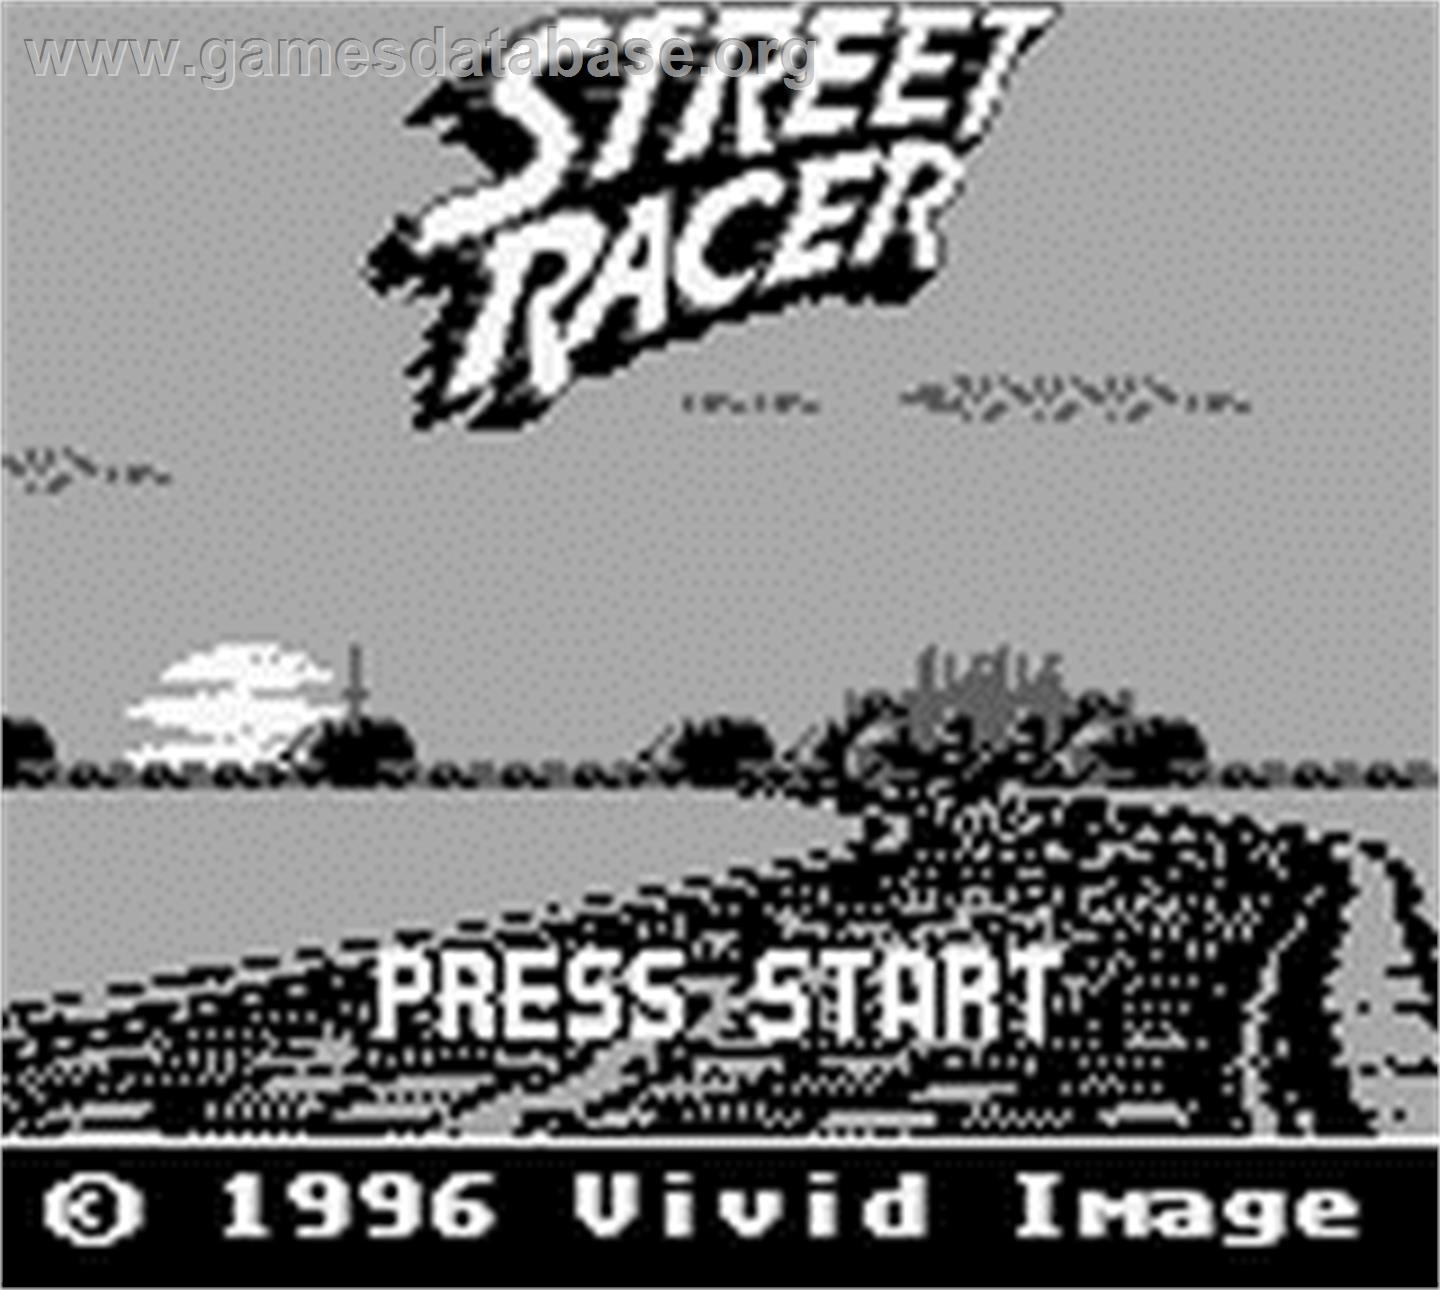 Street Racer - Nintendo Game Boy - Artwork - Title Screen